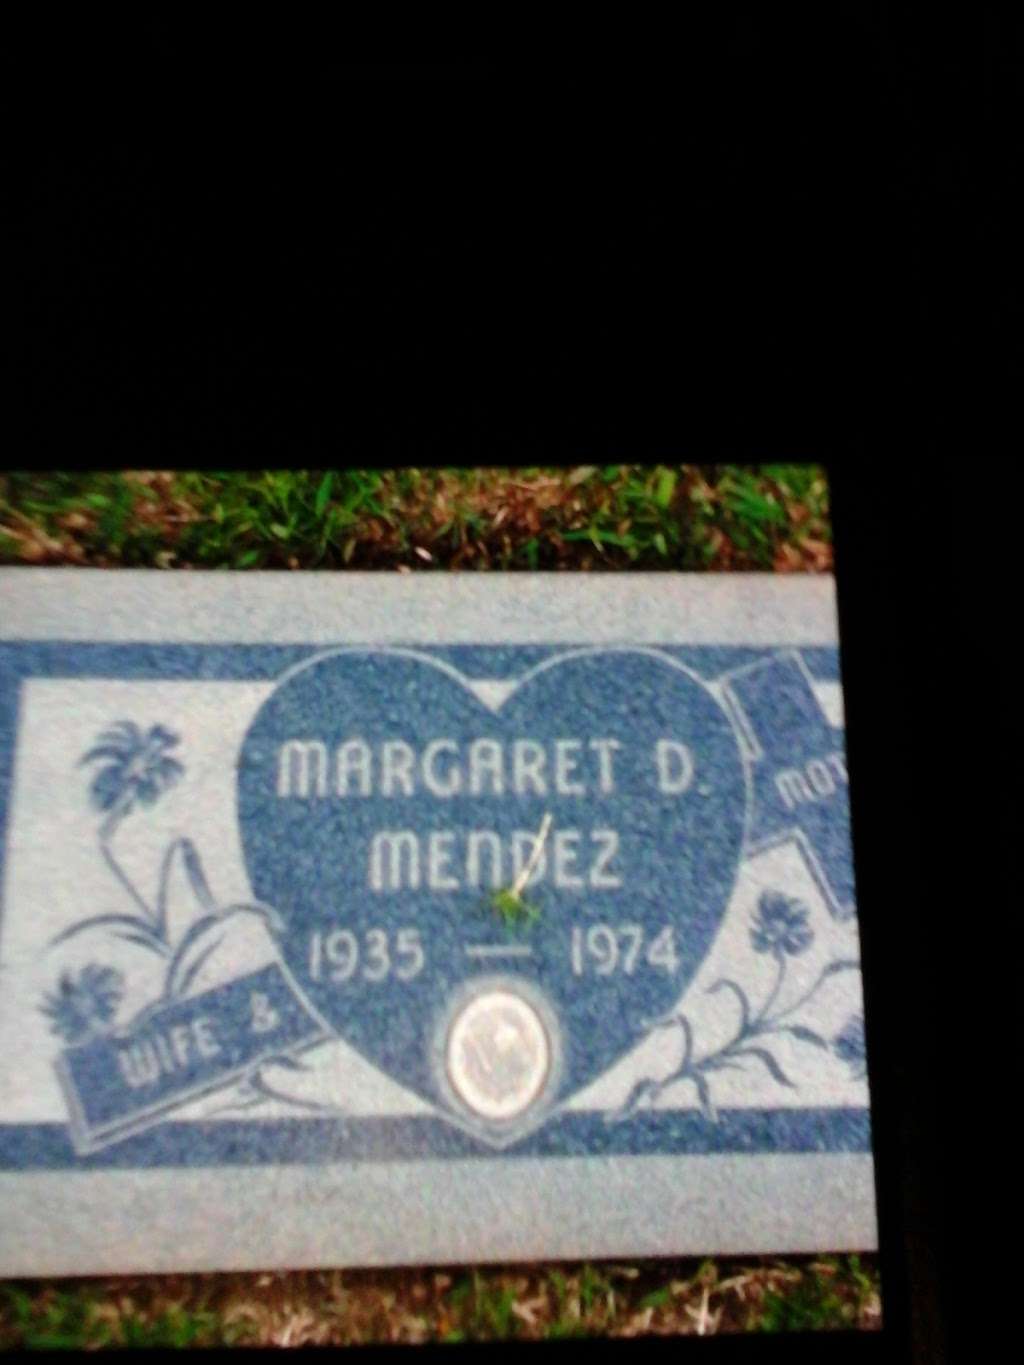 Laverne Cemetery | 3201 B St, La Verne, CA 91750 | Phone: (909) 593-1415